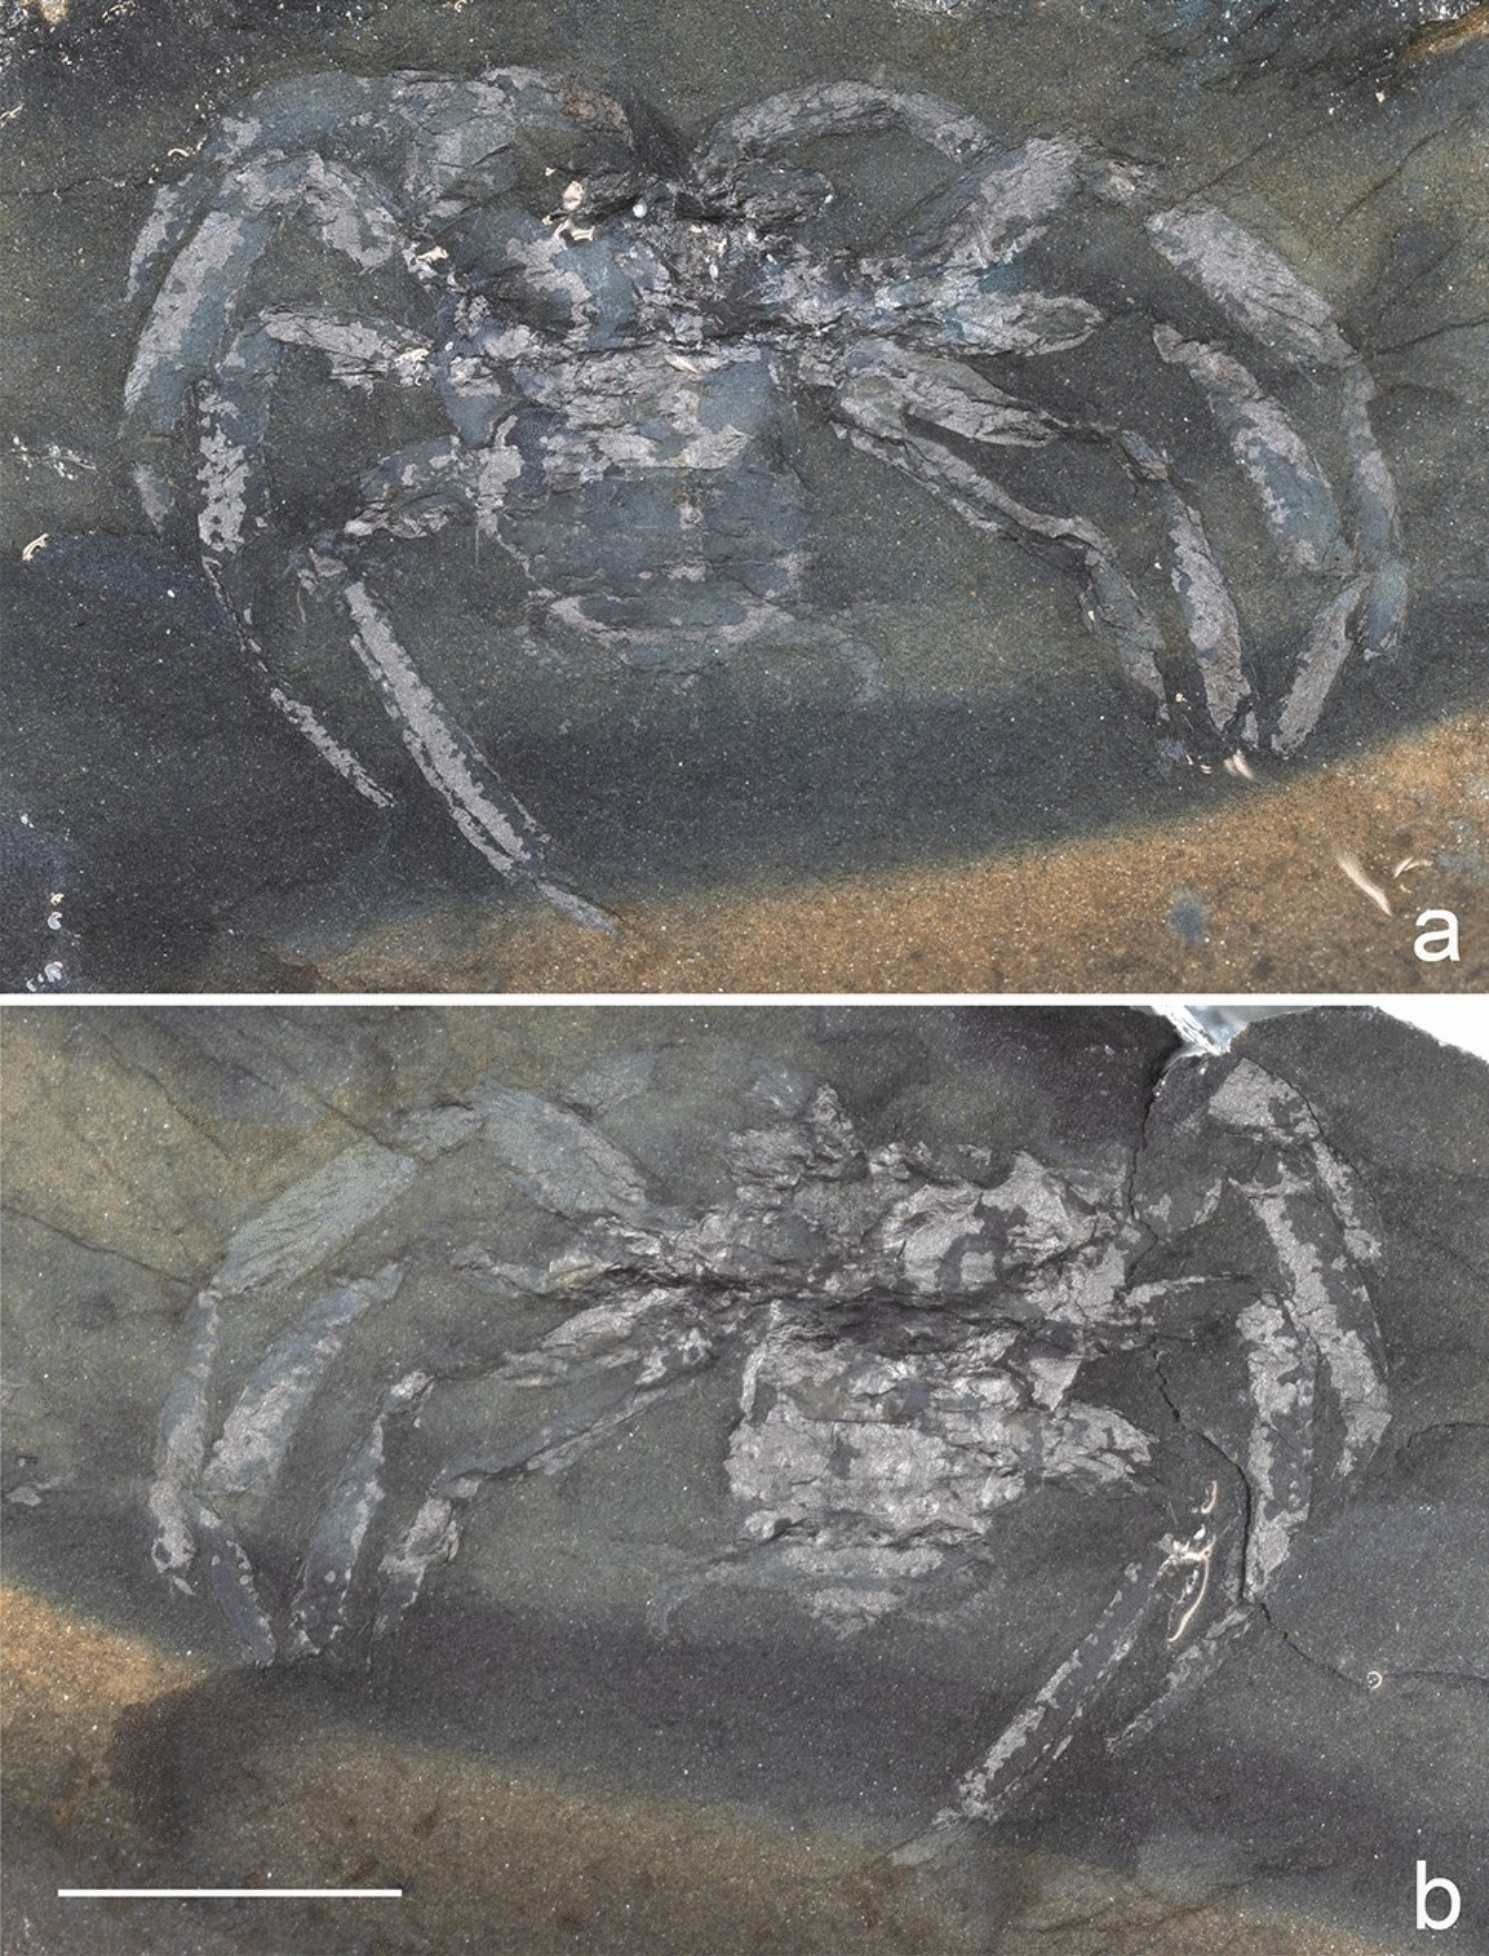 Arthrolycosa wolterbeeki sp. nov., העכביש המאובן העתיק ביותר (Arachnida: Araneae) מגרמניה, מהפחמן המאוחר של פיסברג ליד אוסנברוק, סקסוניה התחתונה.